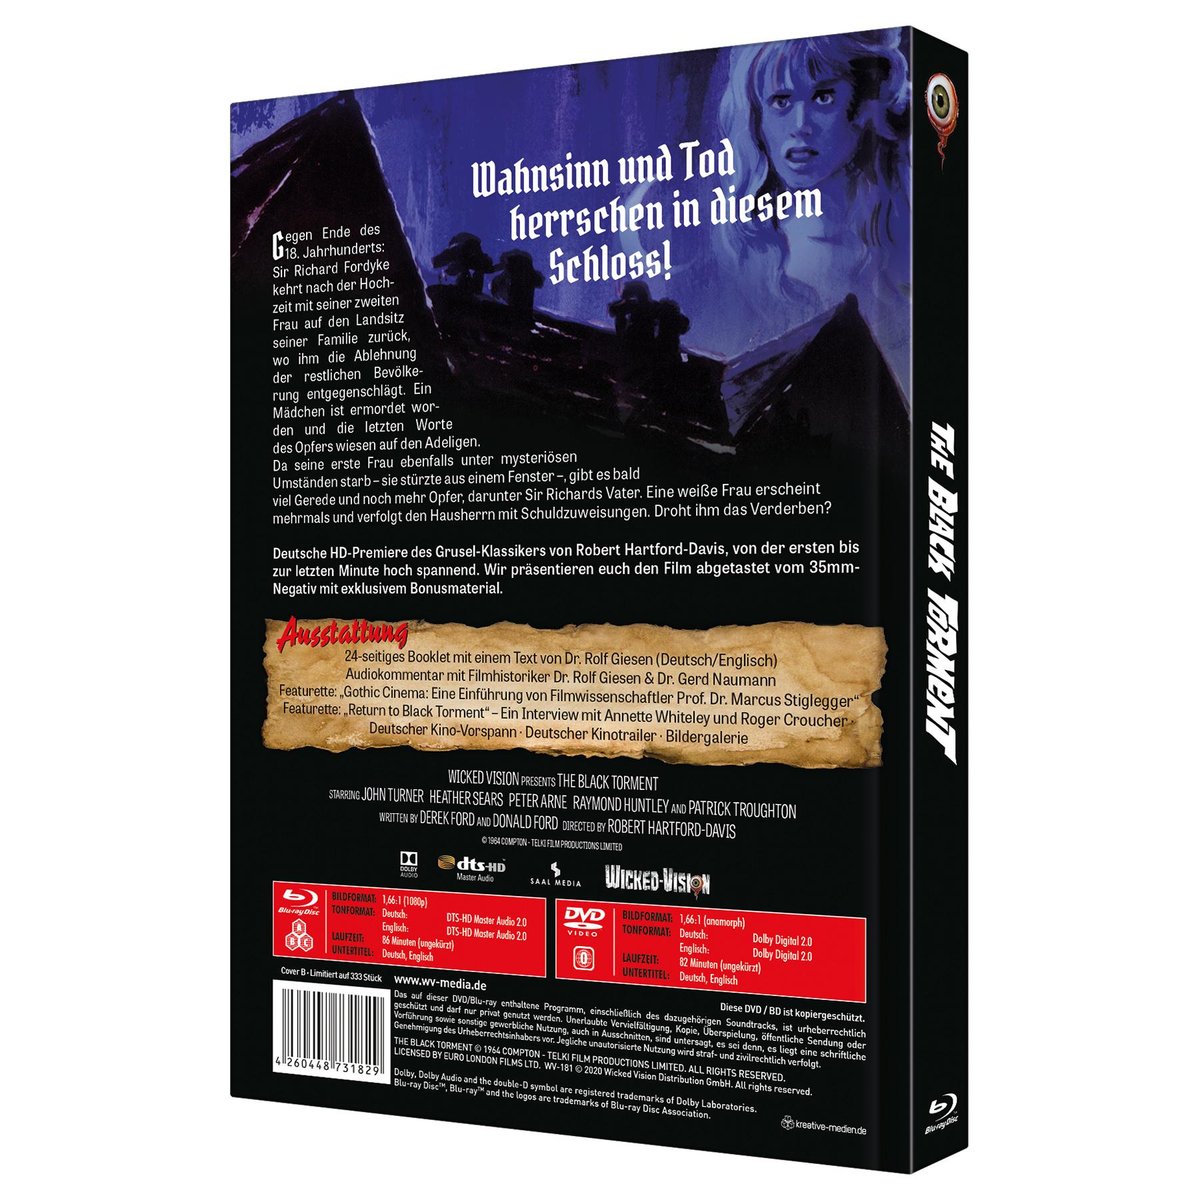 Grauen auf Black Torment, Das - Uncut Mediabook Edition (DVD+blu-ray) (B)